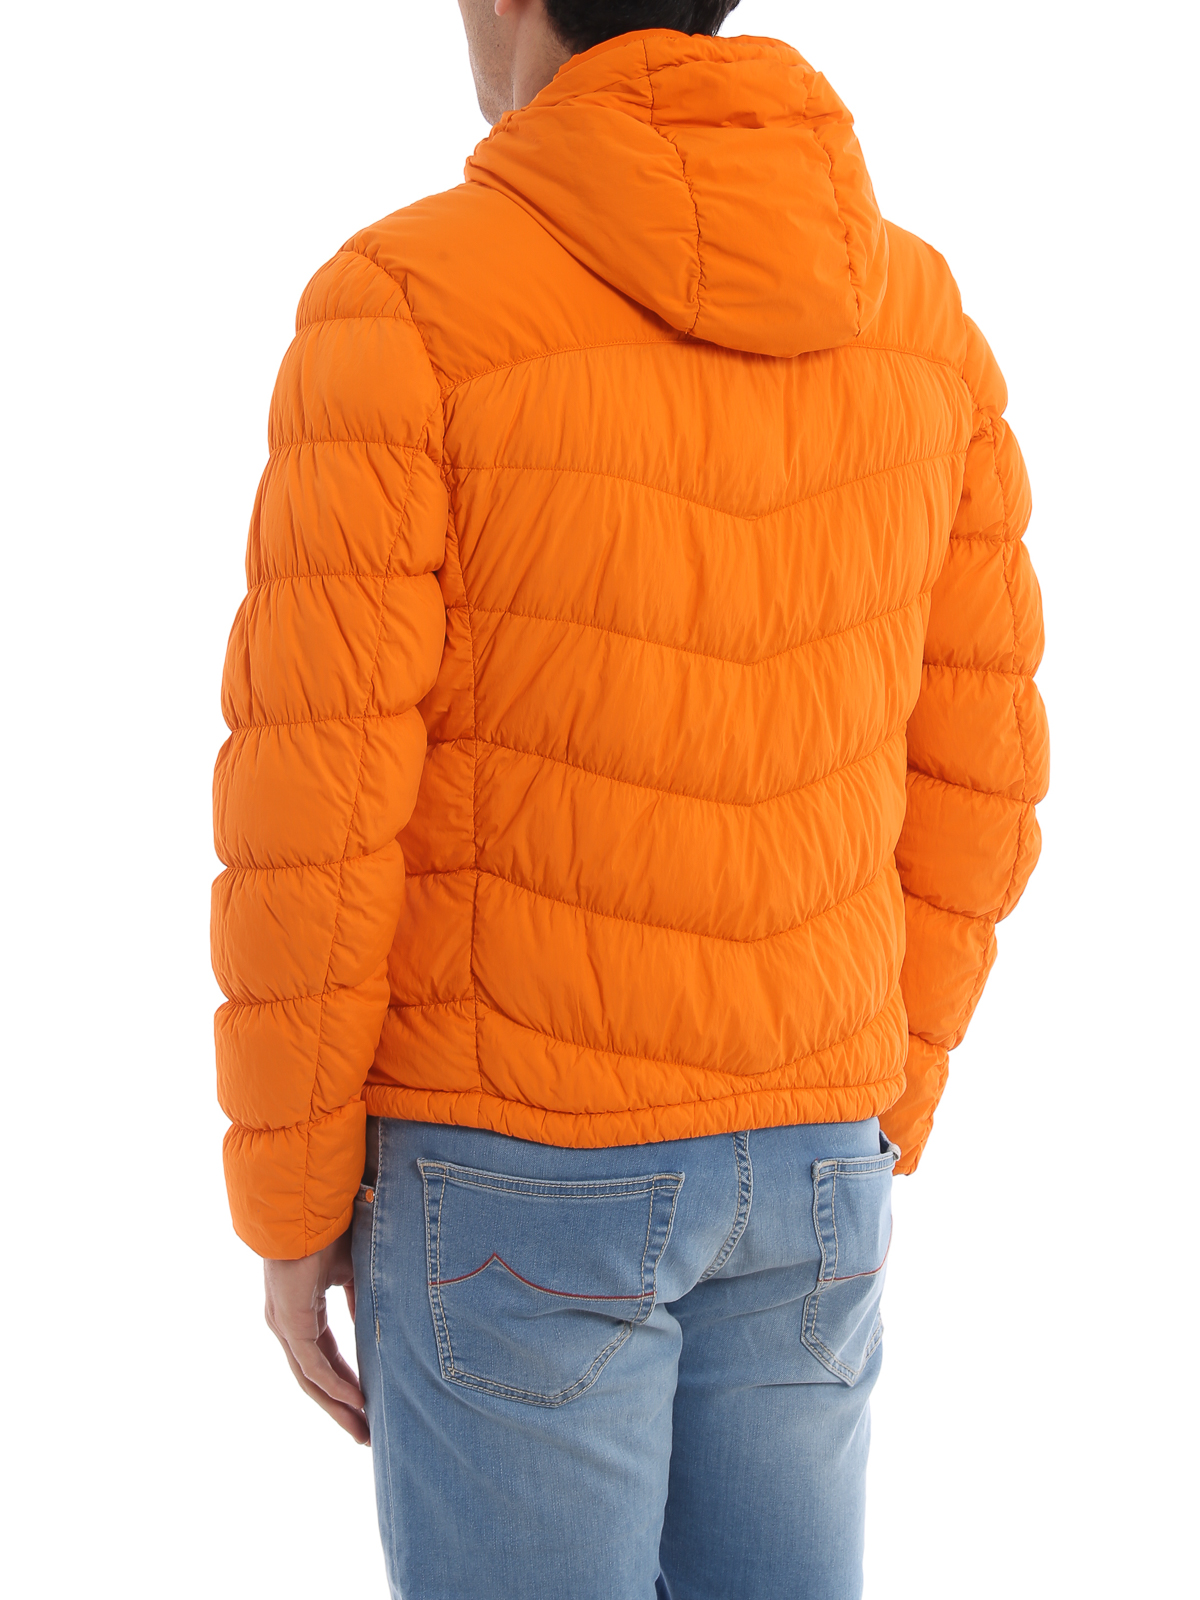 genezen Conserveermiddel Onheil Padded jackets Woolrich - Sundance hooded quilted orange jacket -  WOCPS2802UT12892089